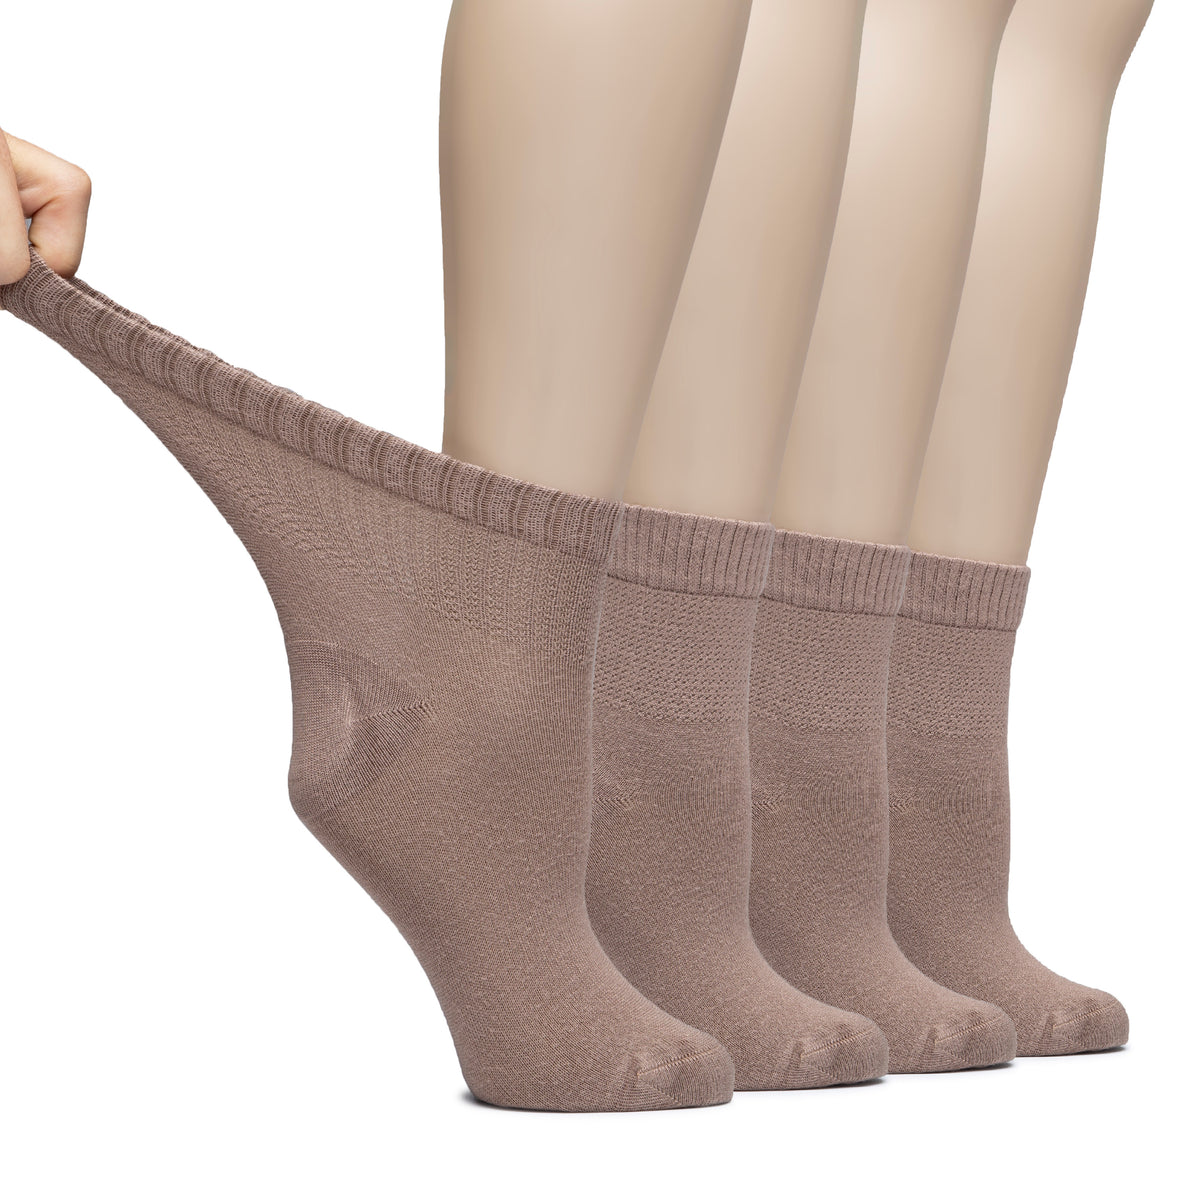 Hugh Ugoli Lightweight Women's Diabetic Ankle Socks Bamboo Thin Socks Seamless Toe and Non-Binding Top, 4 Pairs, , Shoe Size: 6-9/10-12 | Shoe Size: 10-12 | Milk Coffee